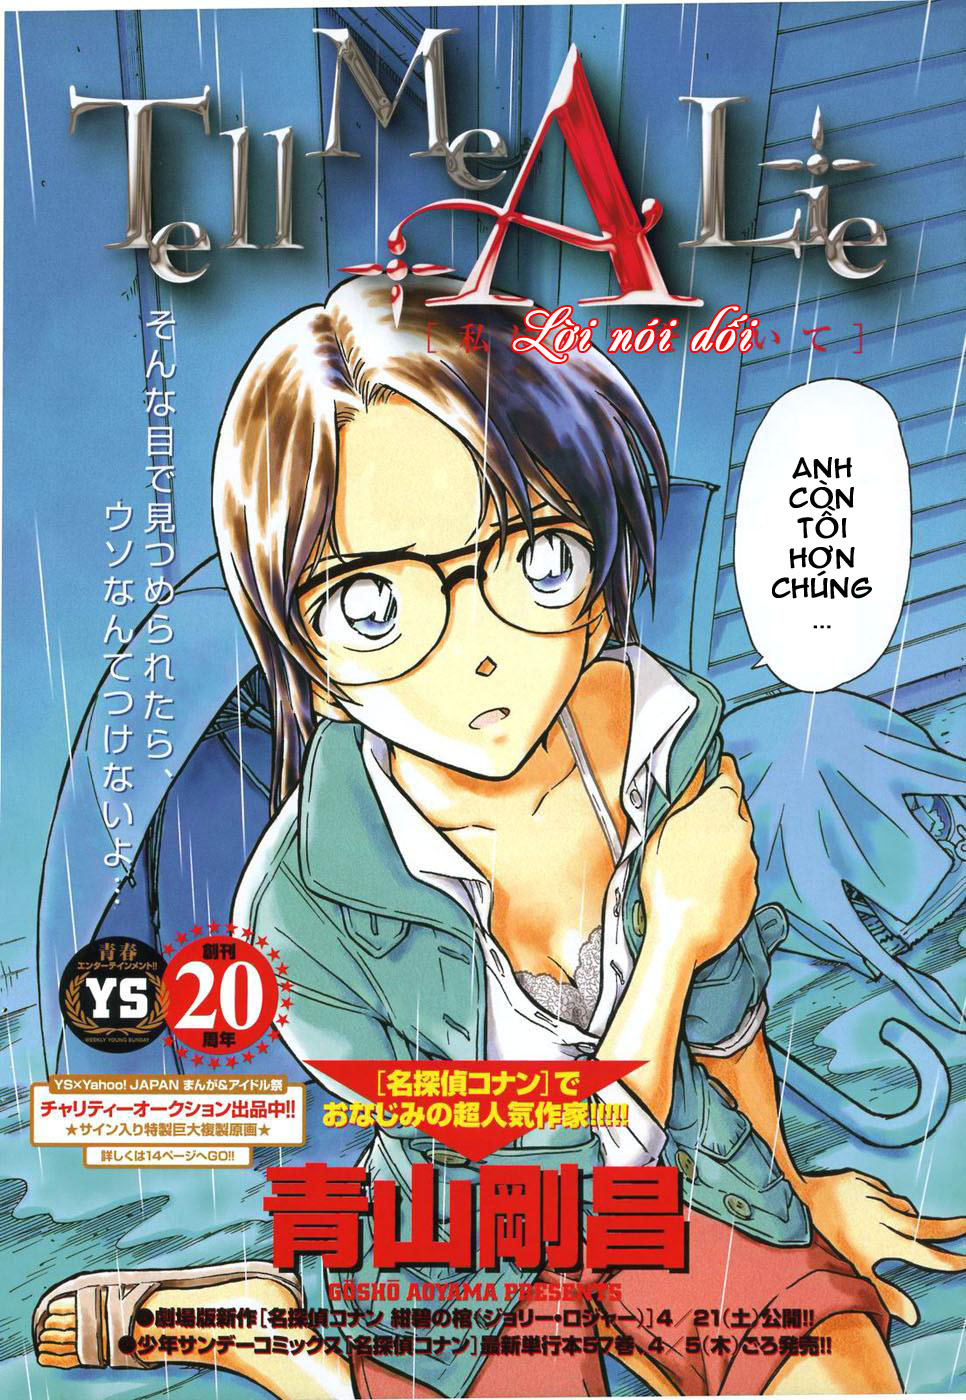 manga-5.jpg (966×1400)